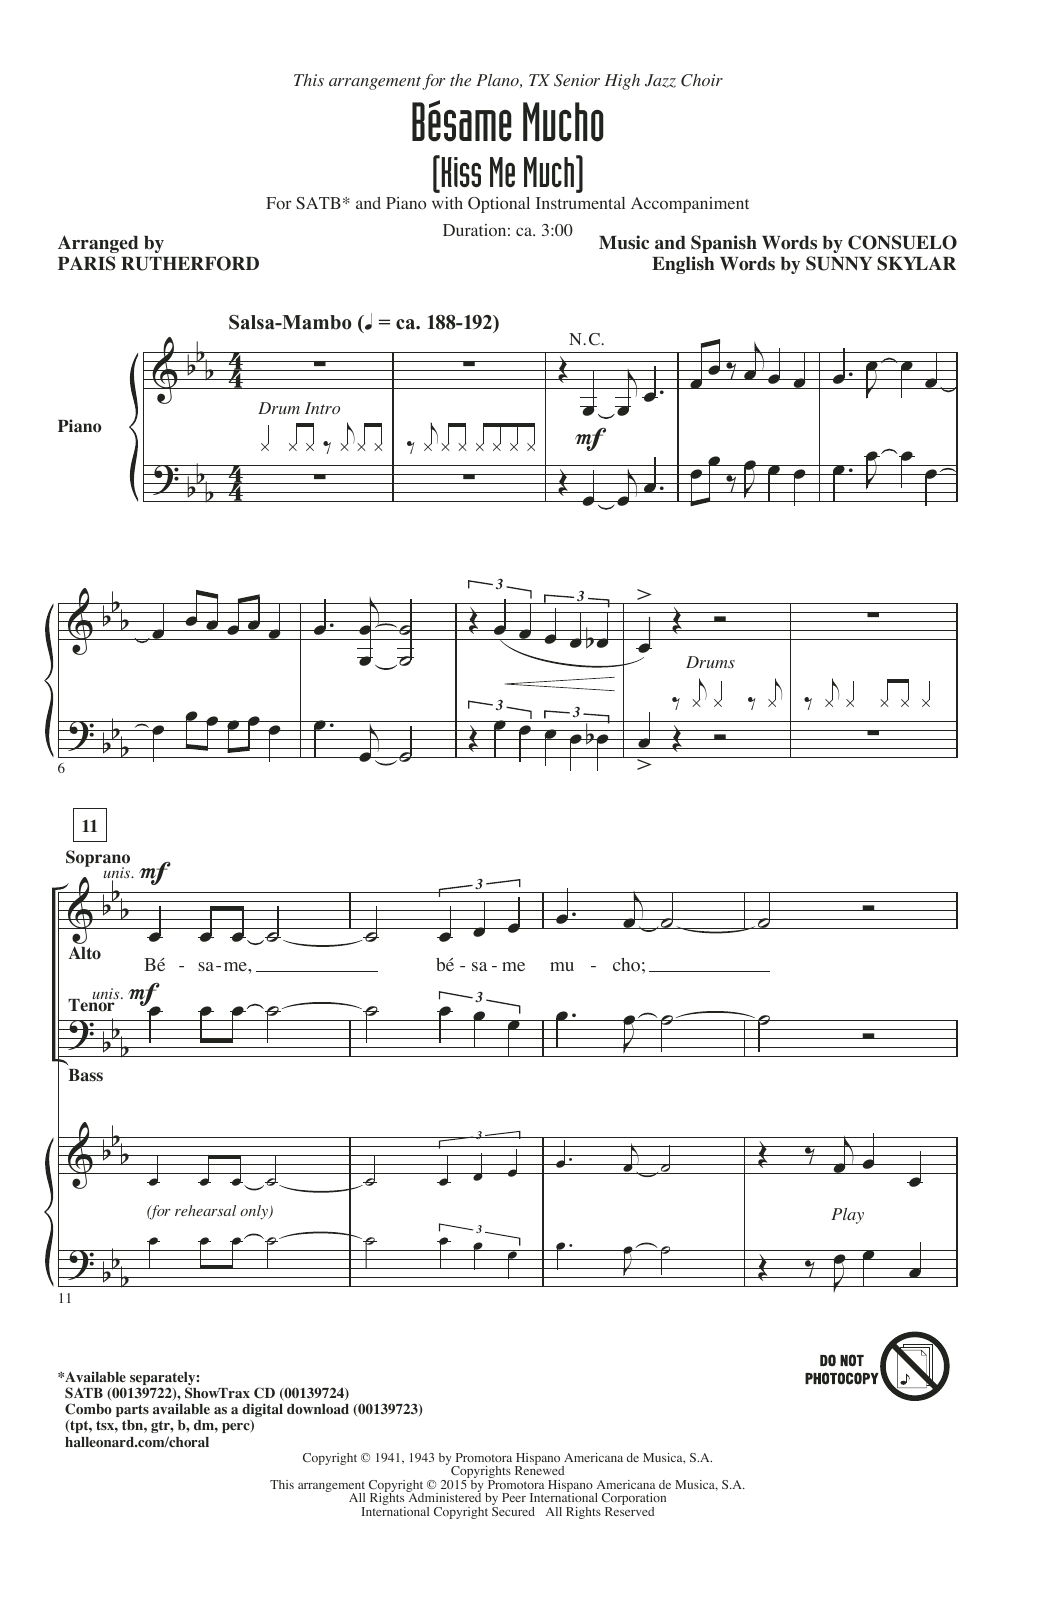 Paris Rutherford Bésame Mucho (Kiss Me Much) sheet music notes and chords arranged for SATB Choir